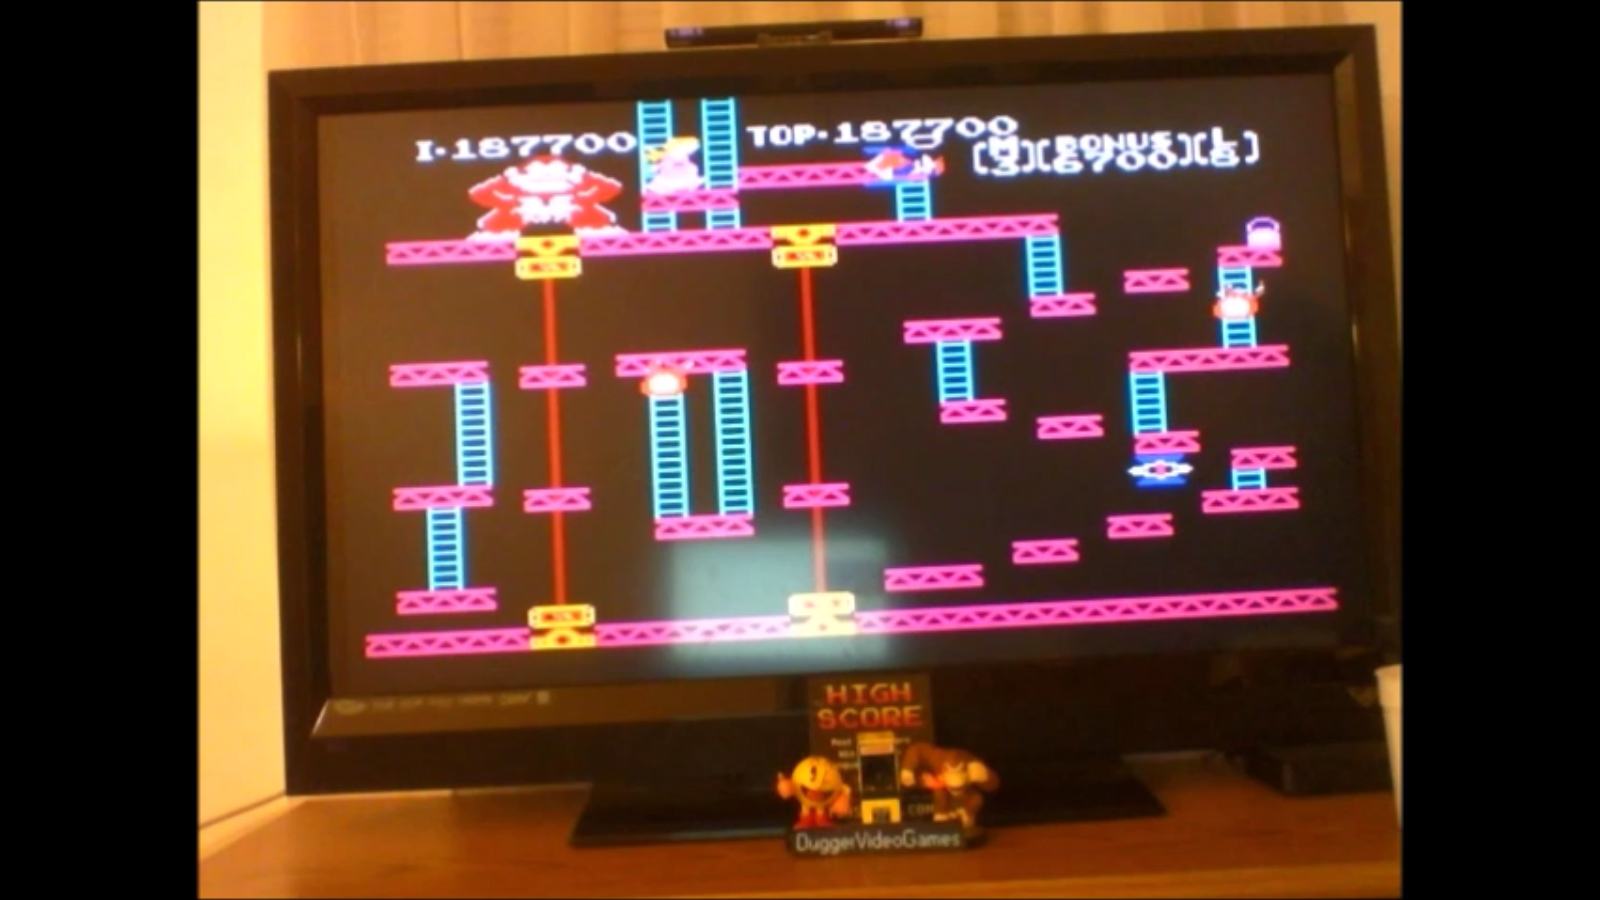 DuggerVideoGames: Donkey Kong [1 Life] (NES/Famicom Emulated) 187,700 points on 2017-02-21 00:18:58